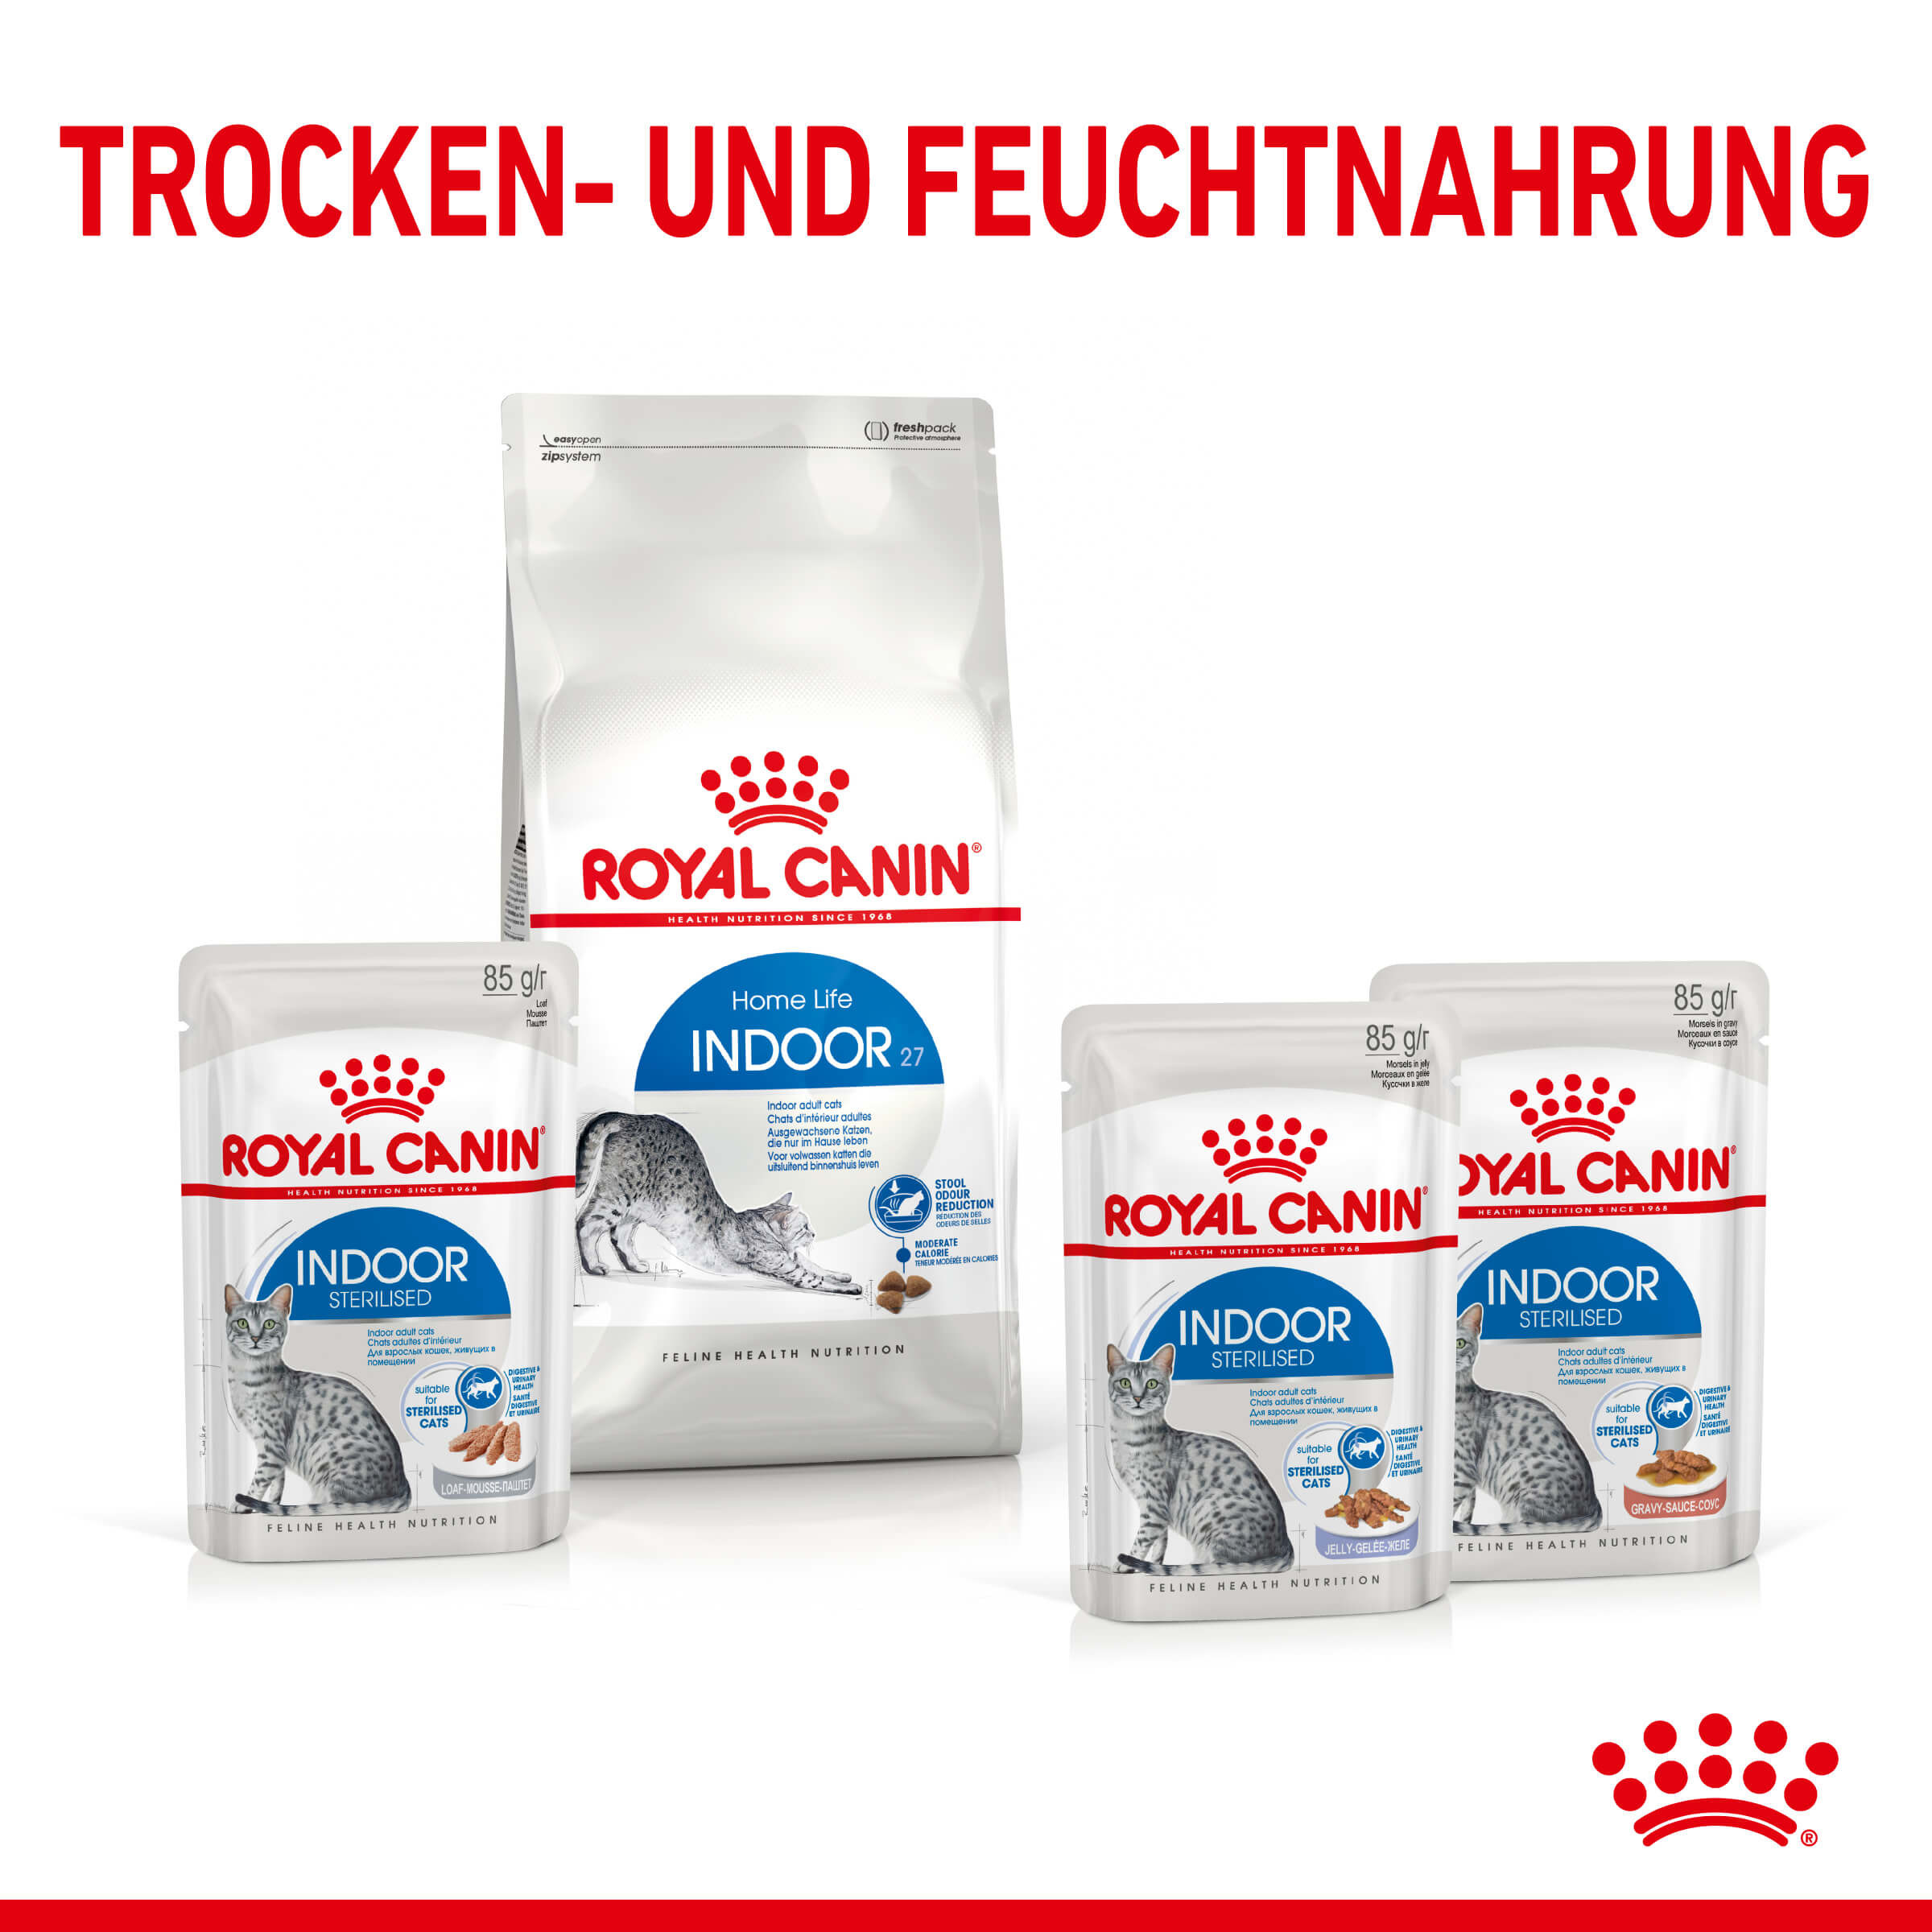 12x85g Royal Canin Urinary S/O MOUSSE Frischebeutel Katzenfutter